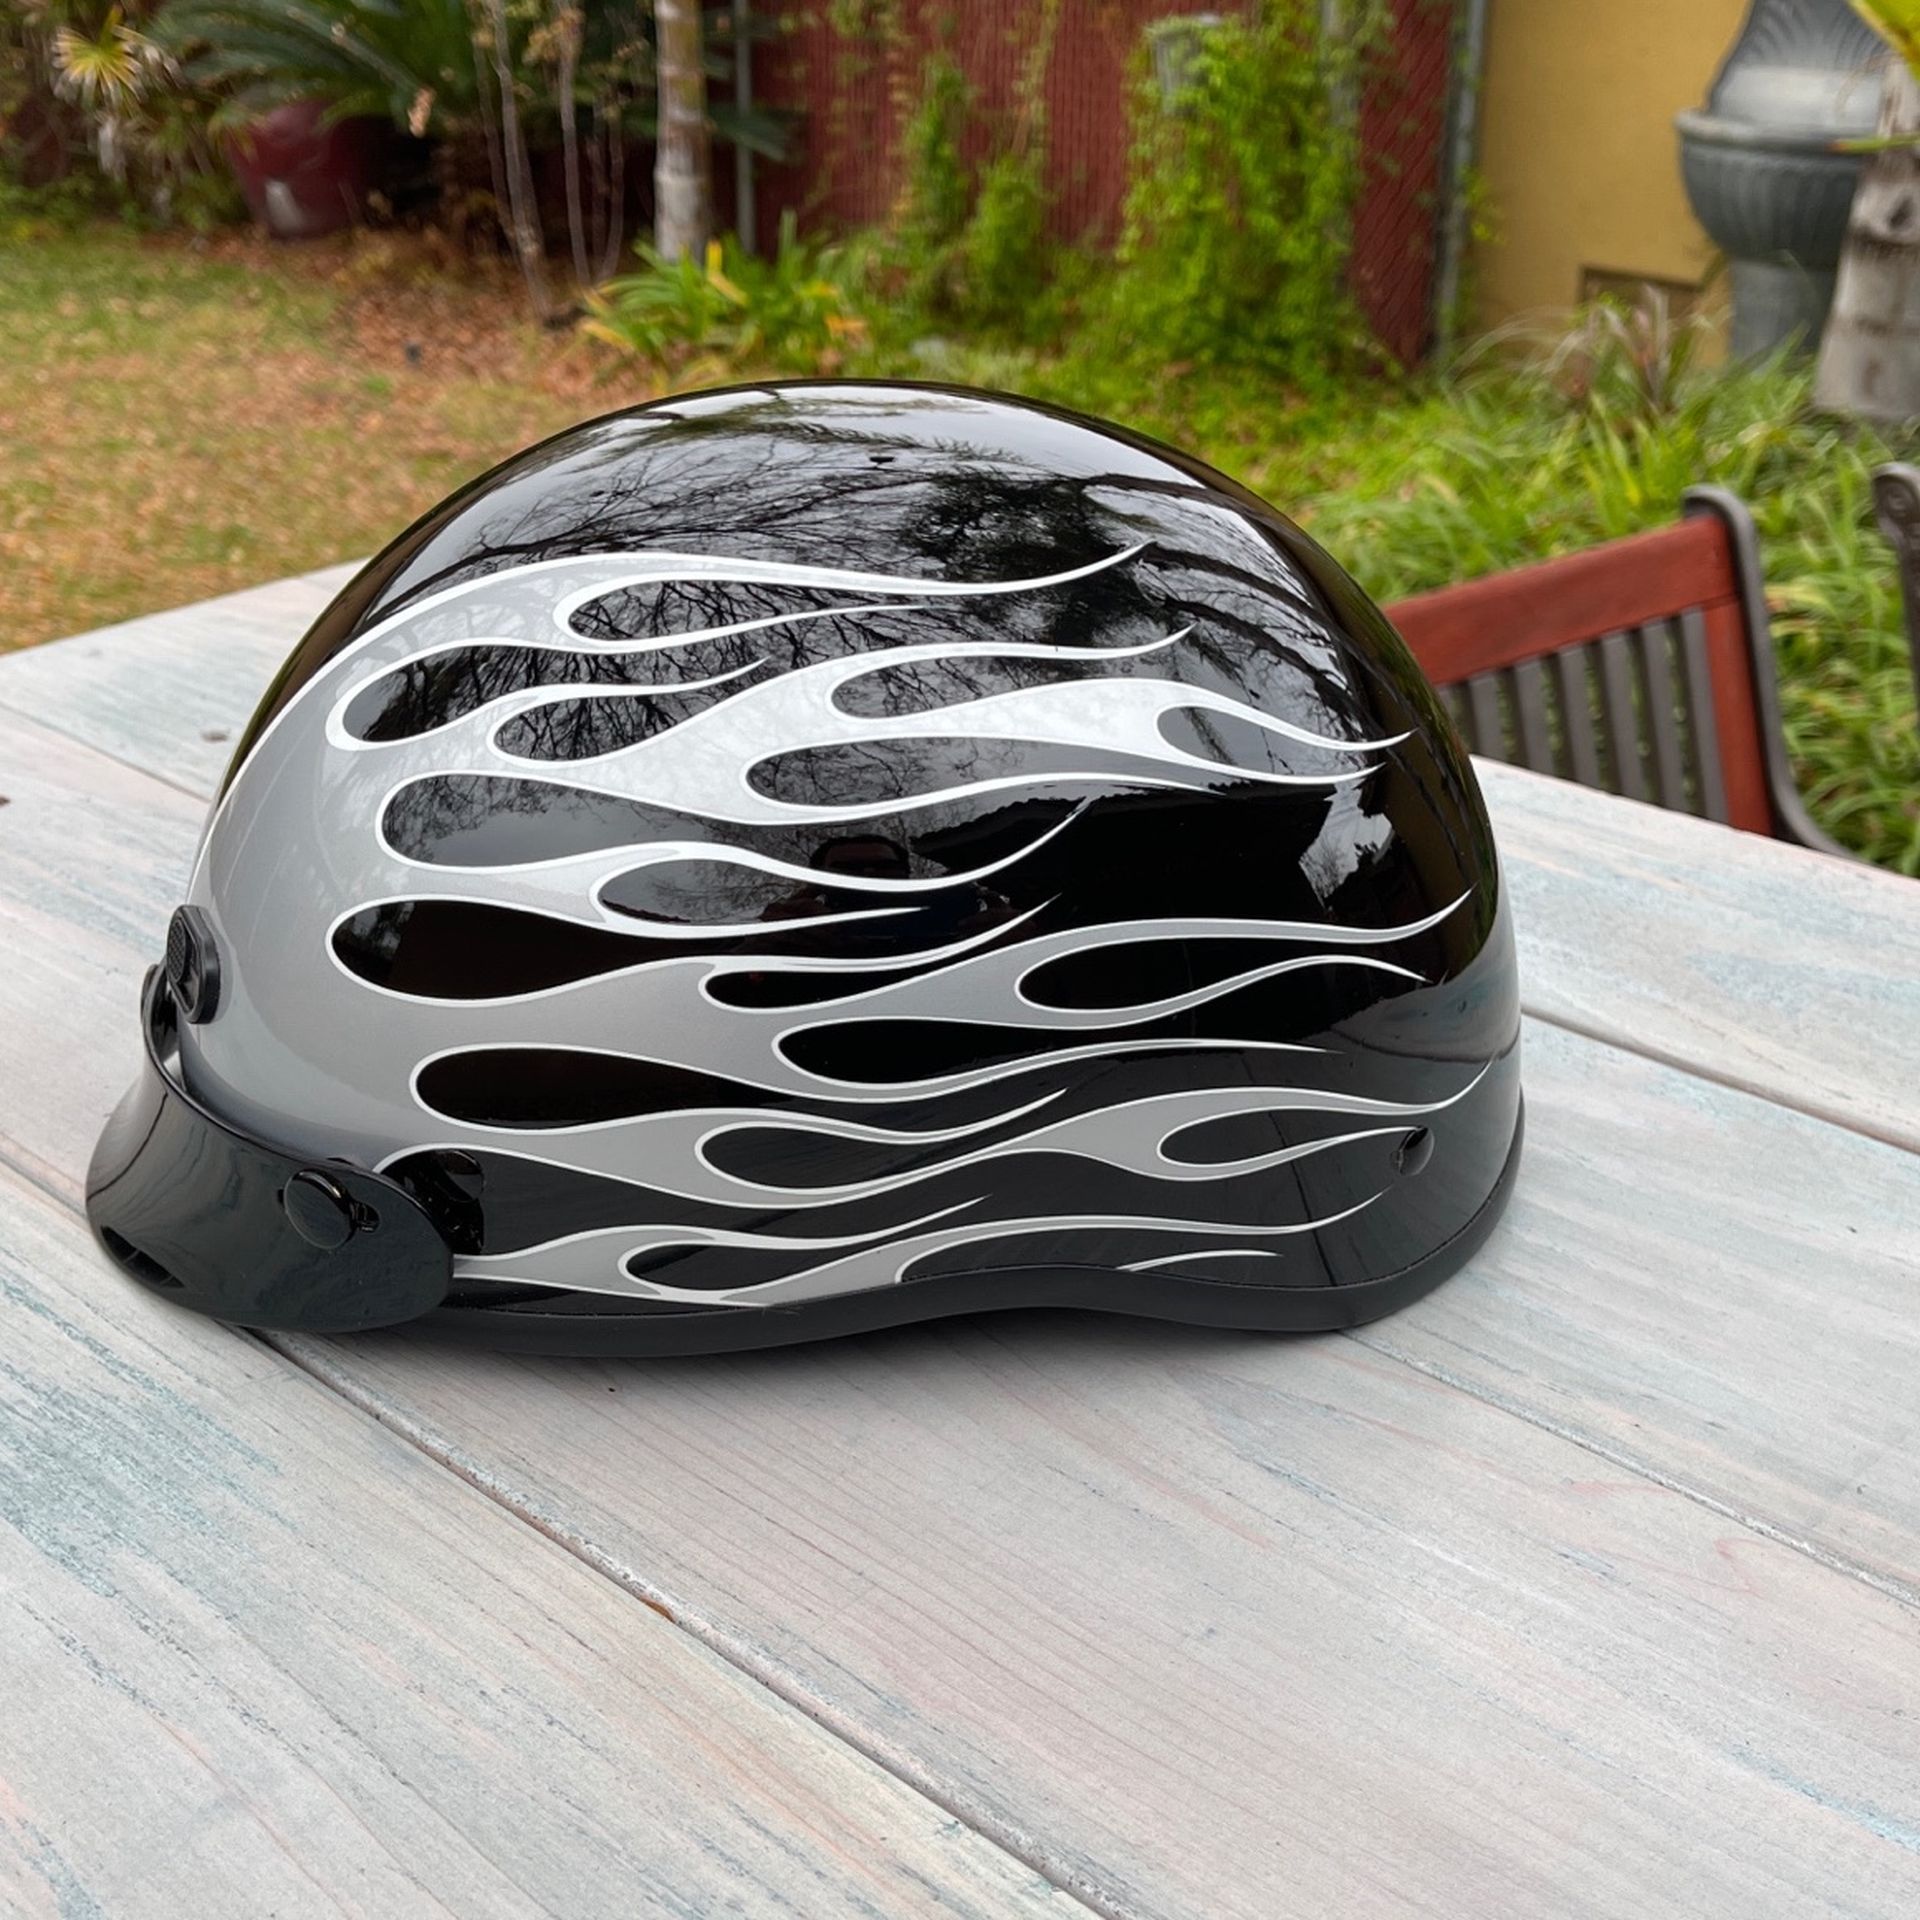 Motorcycle Helmet Excellent Condition!!!